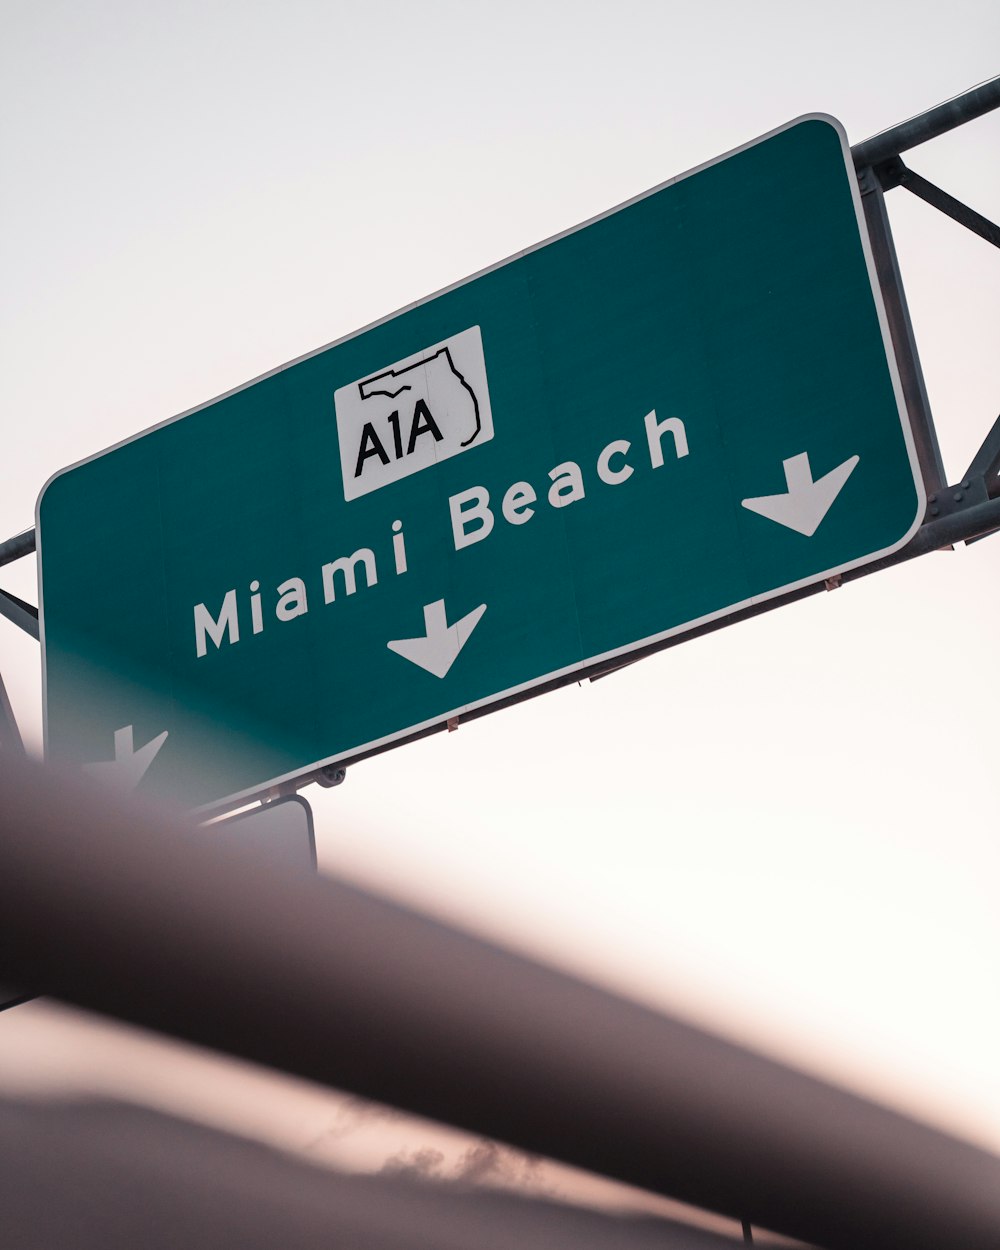 A1A Miami Beach sign